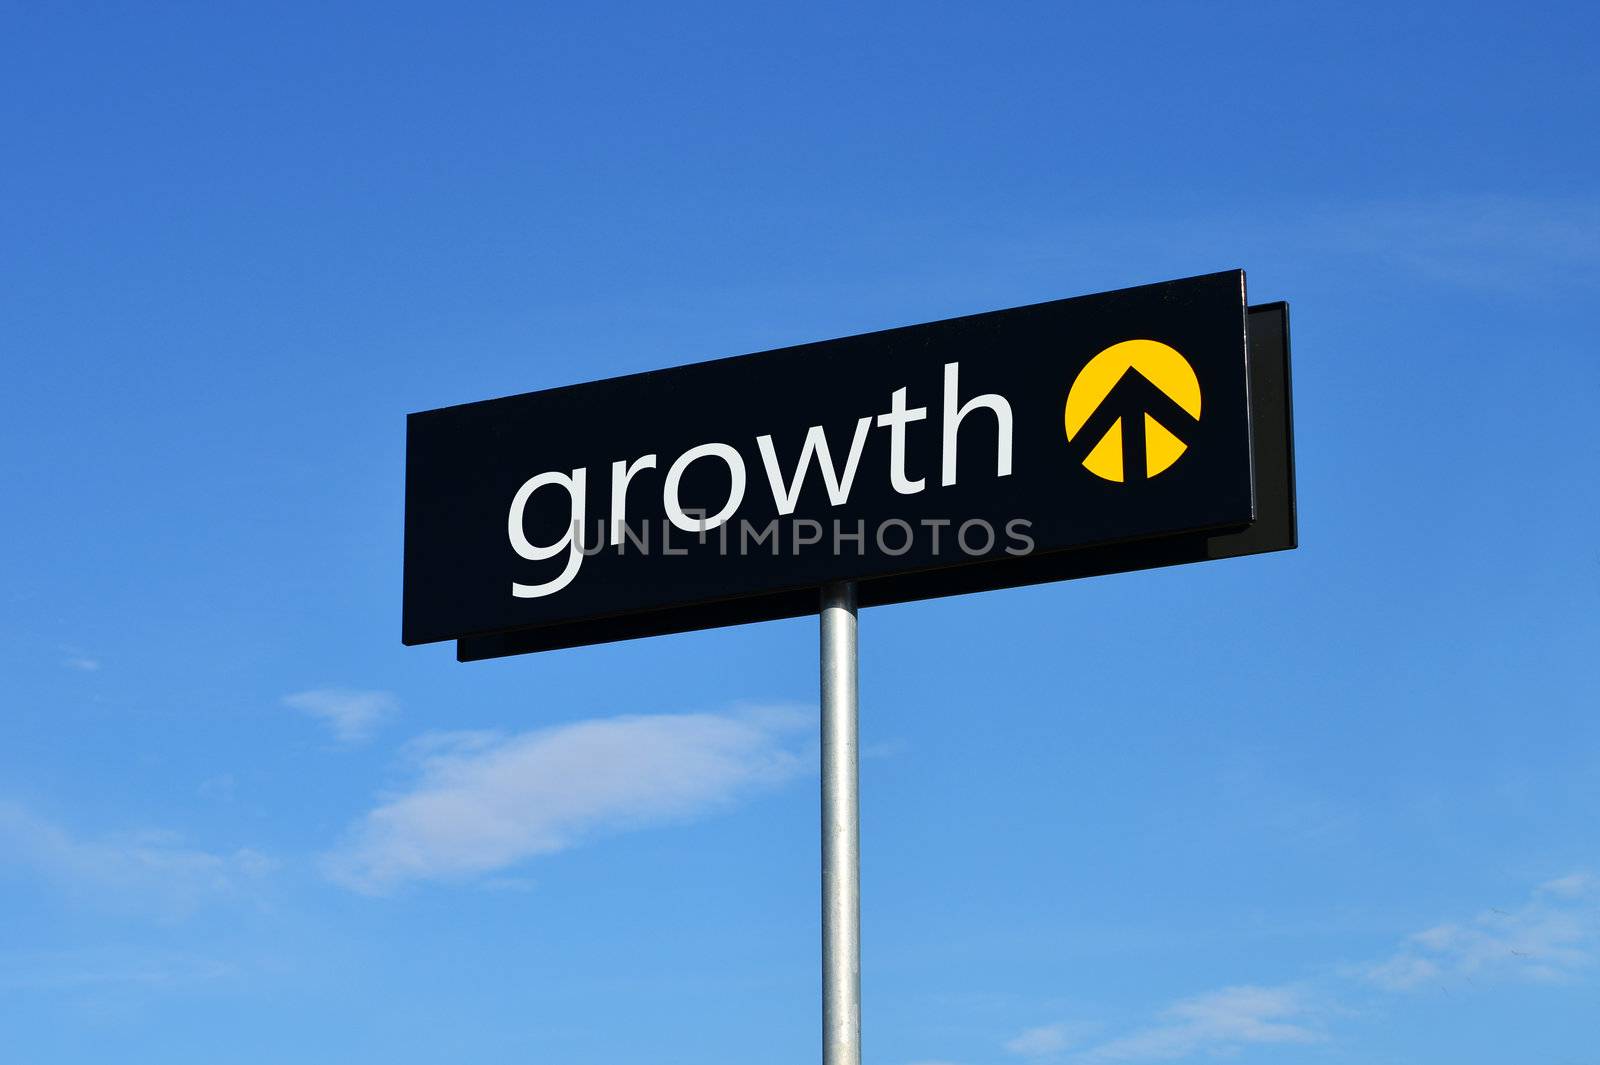 Street sign with upward arrow reading "growth"